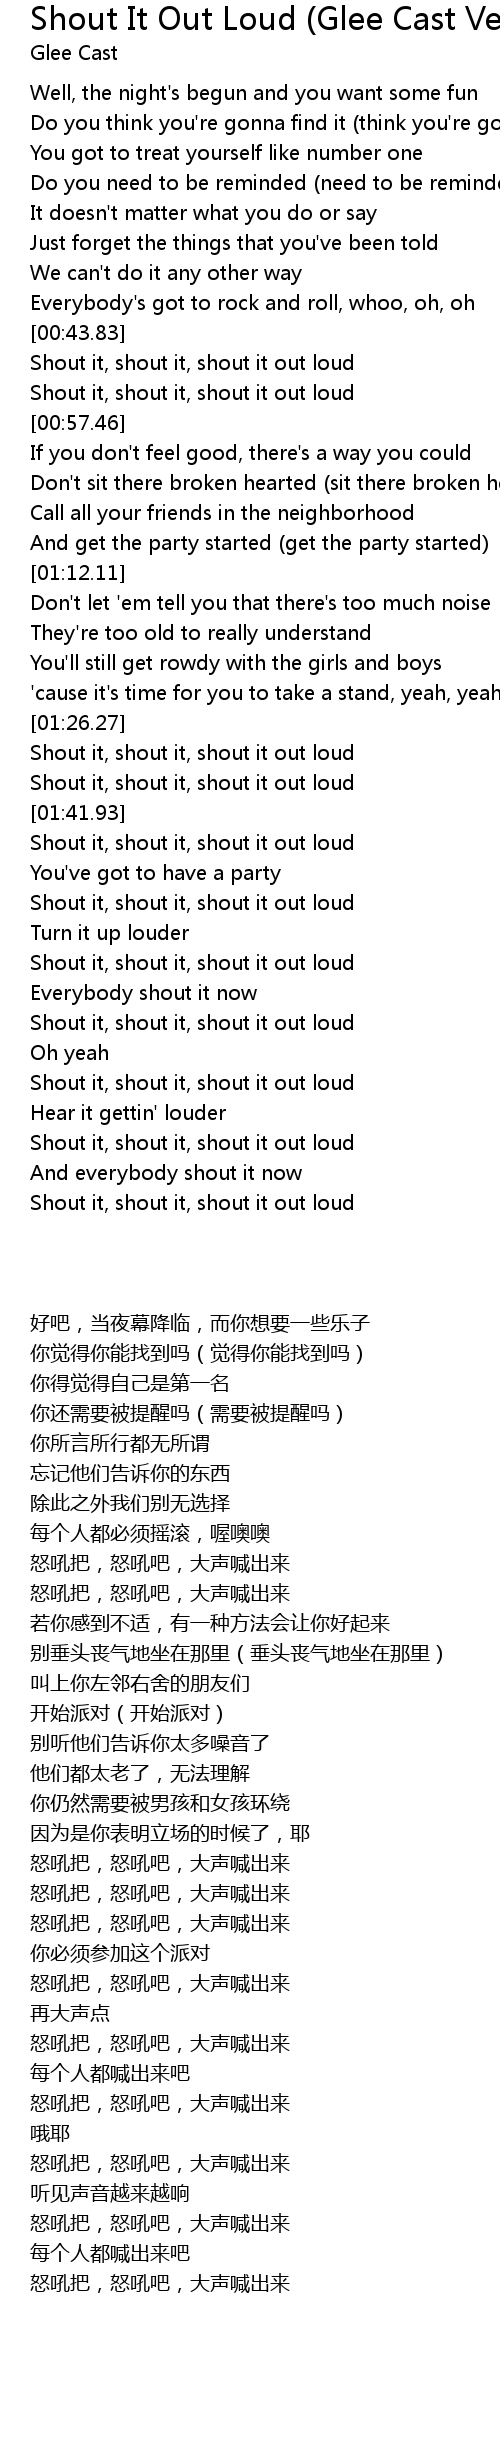 Shout It Out Loud Glee Cast Version Lyrics Follow Lyrics